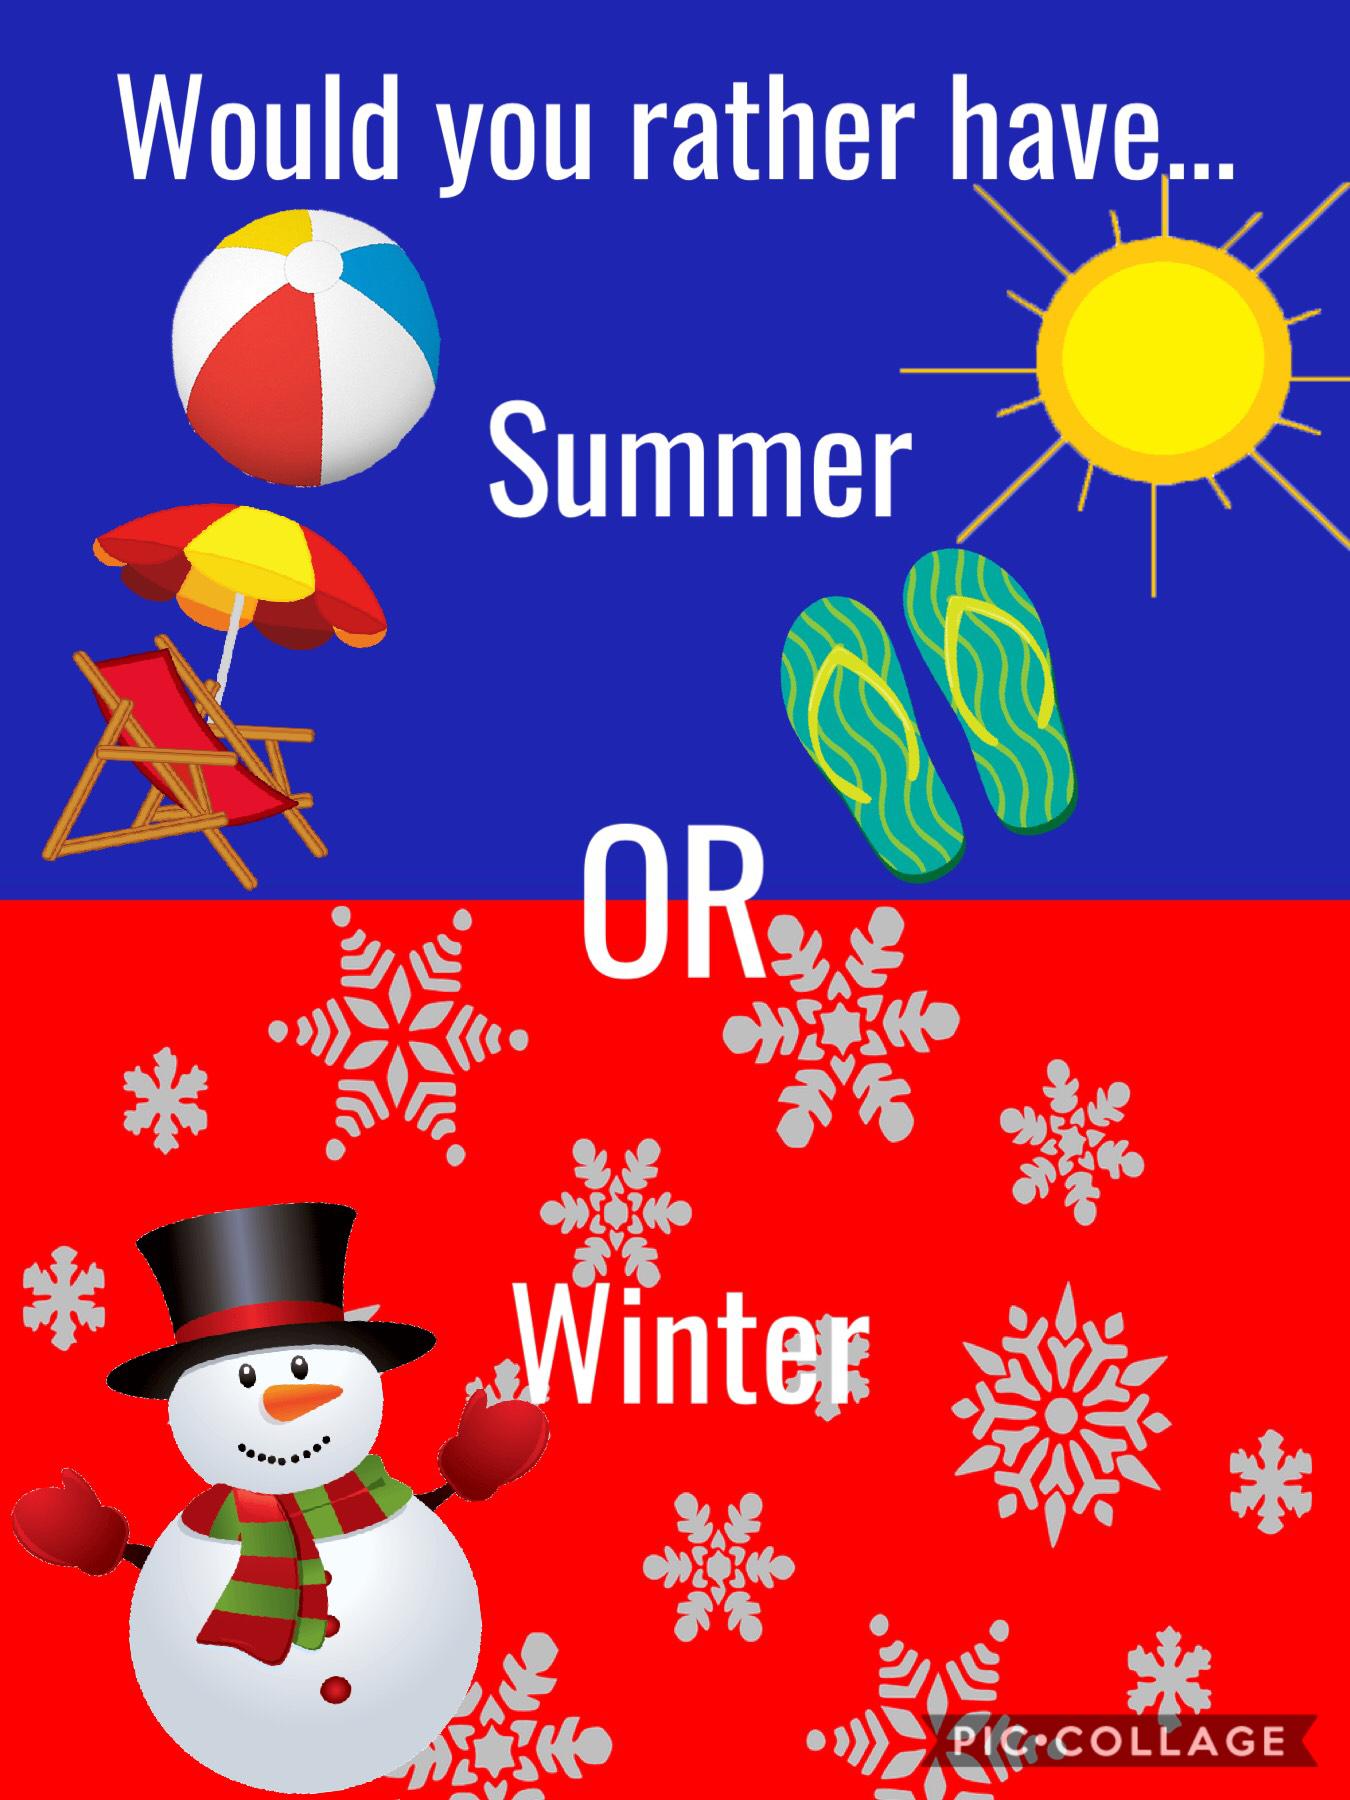 Summer OR Winter?